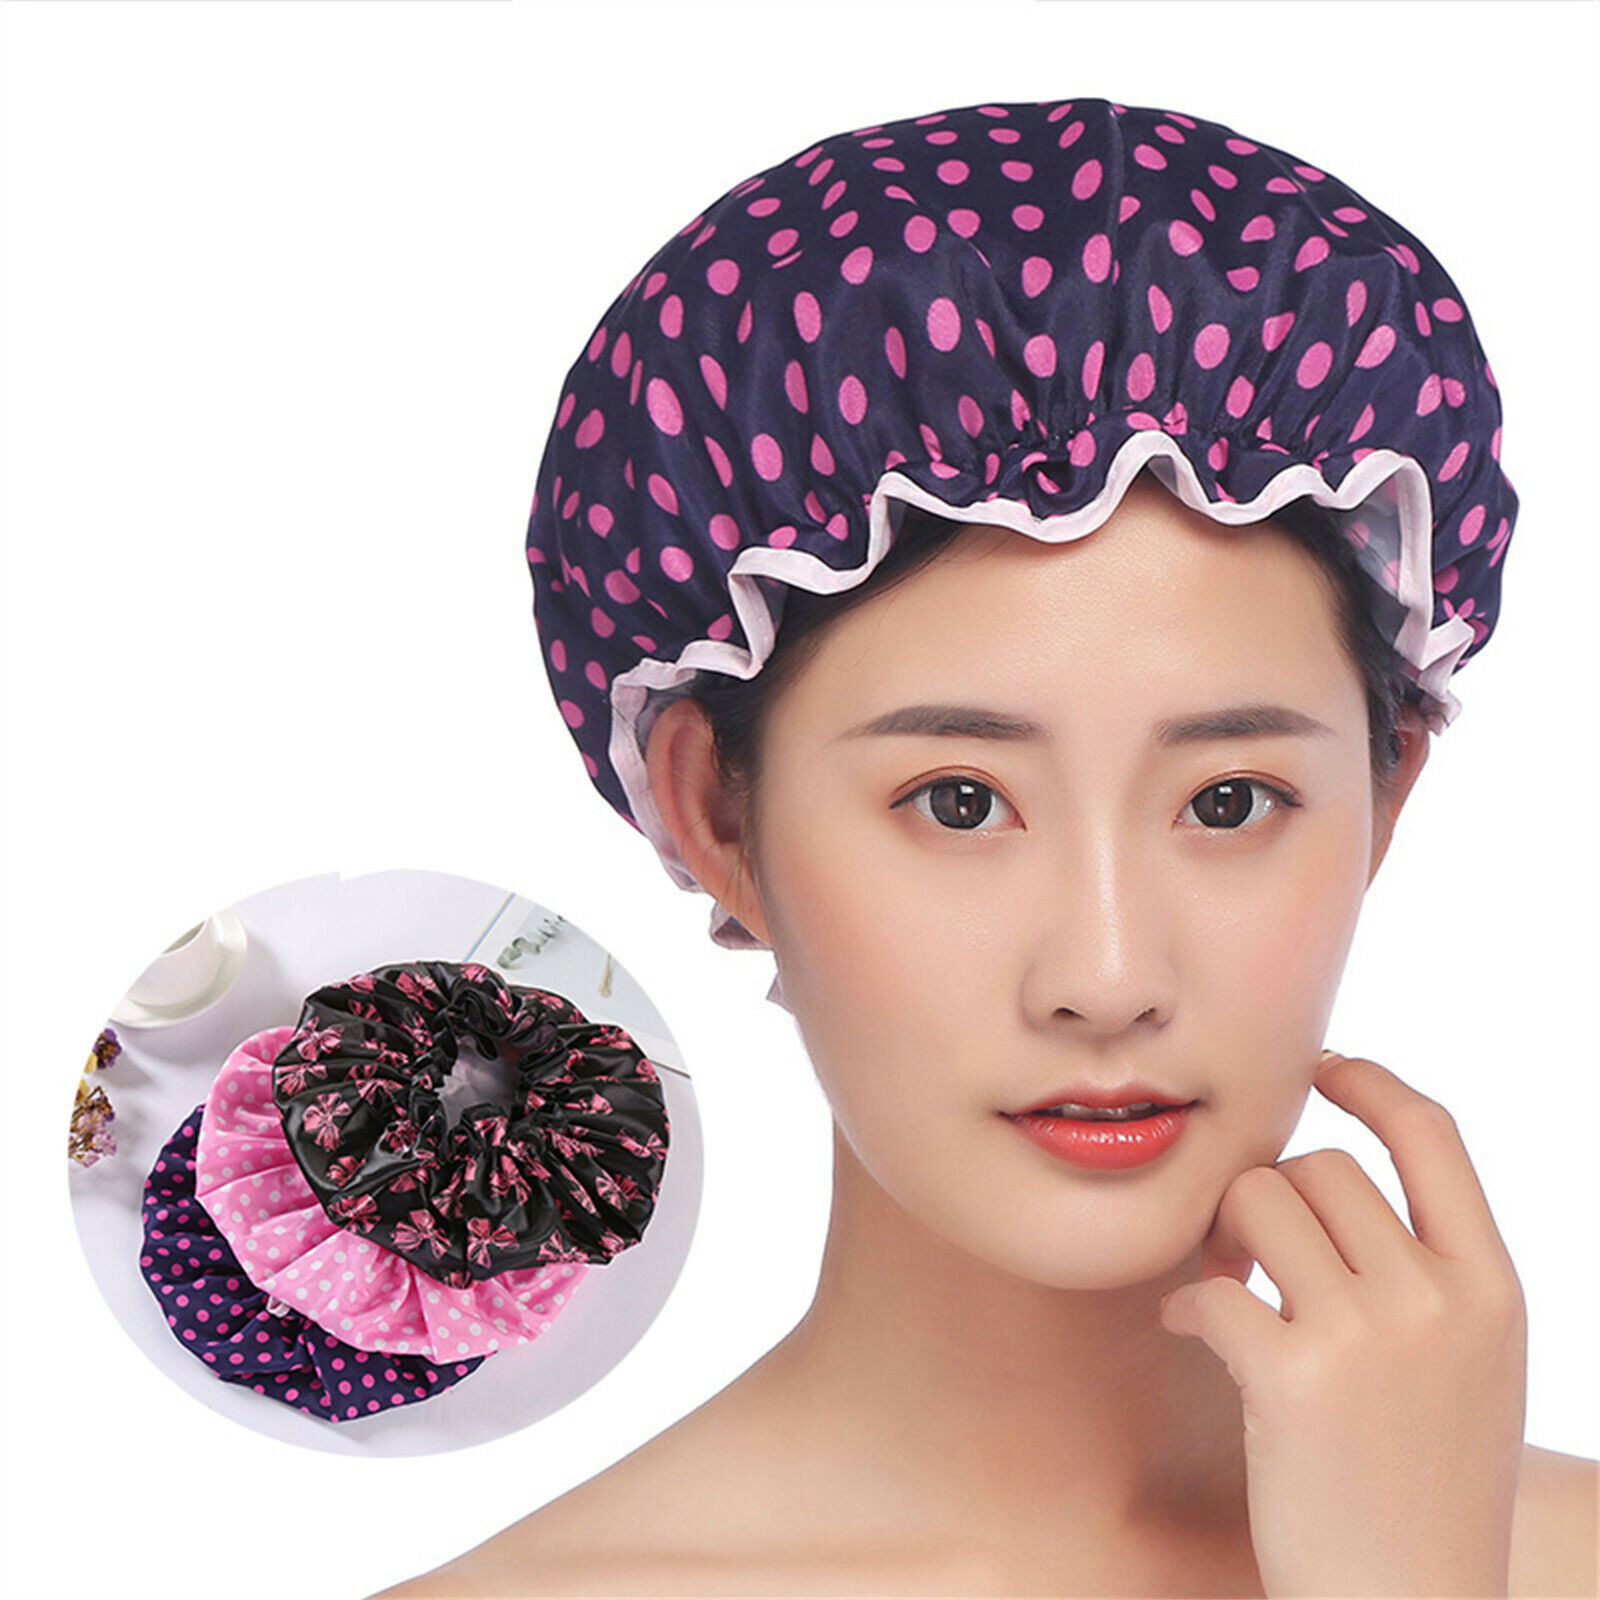 3X Women Genuine Free Shipping Satin Night gift Sleep Cap Hair Head Cover W Bonnet Hat Silk